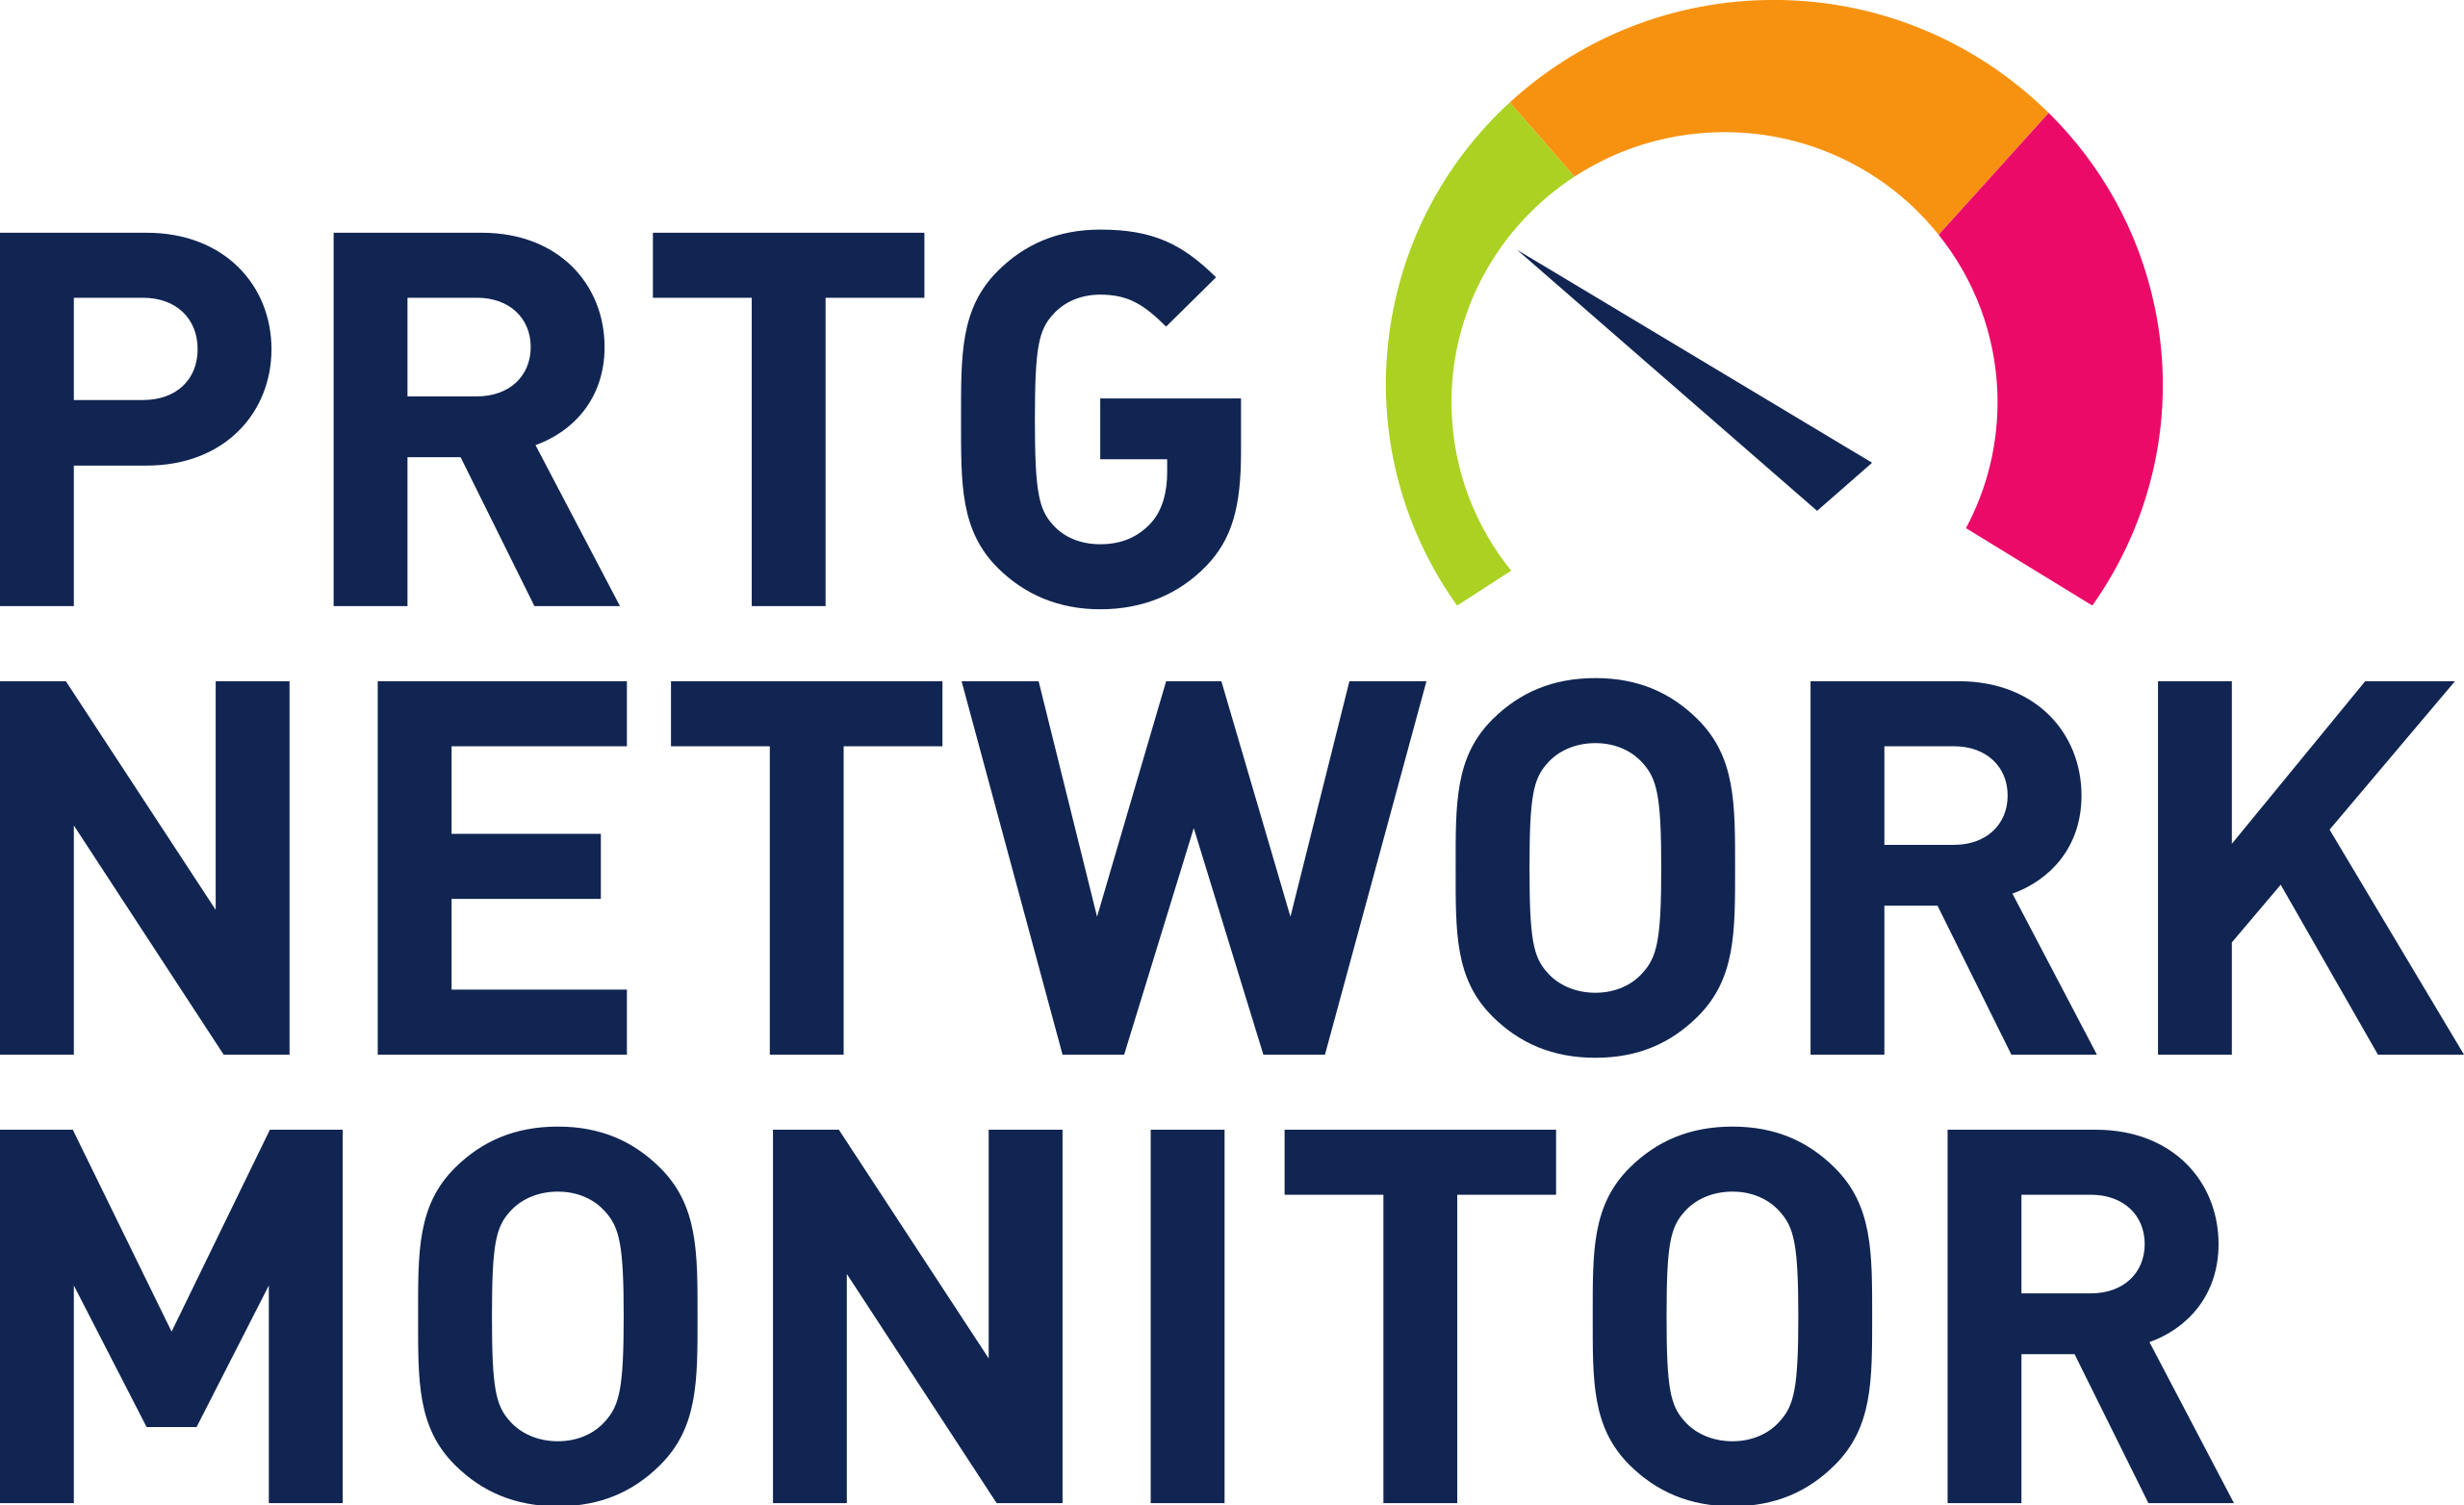 Prtg network monitor. Логотип PRTG. Paessler PRTG. Paessler лого.